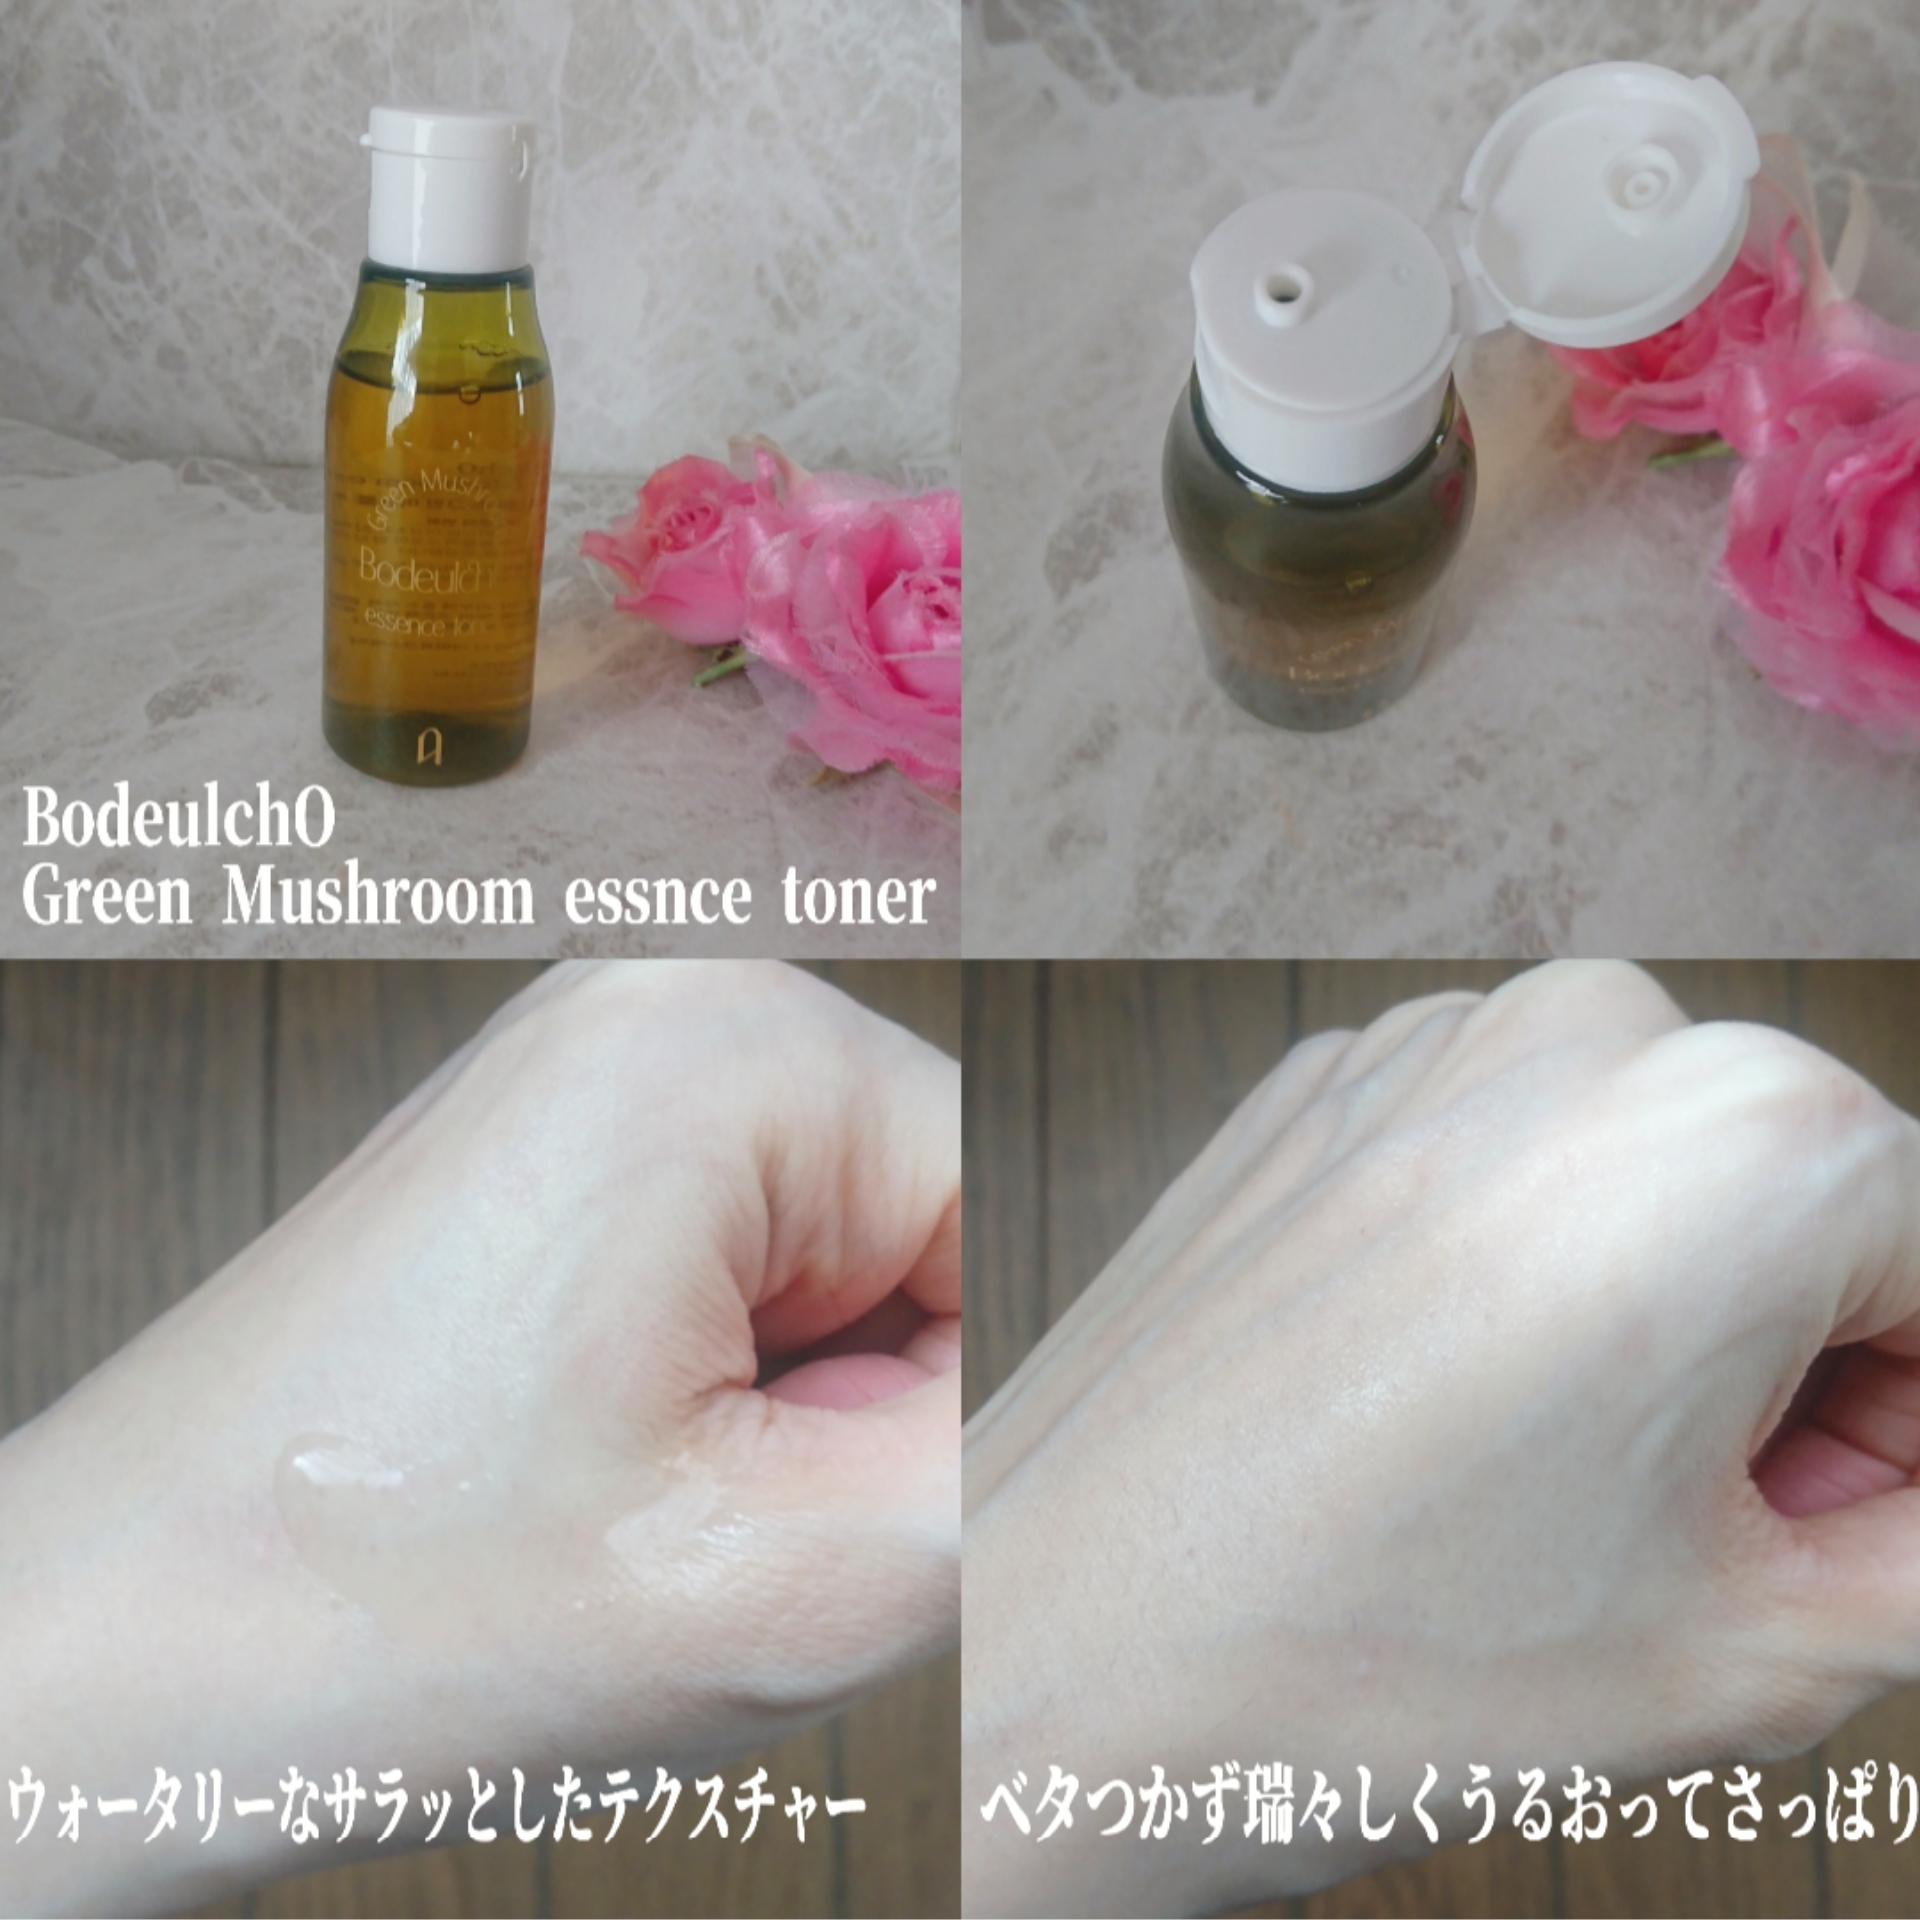 Amiok BodeulchO Relaxing Ampoure wash pack 60mlBodeulchO Green Mushroom essnce toner 60mlを使ったYuKaRi♡さんのクチコミ画像5